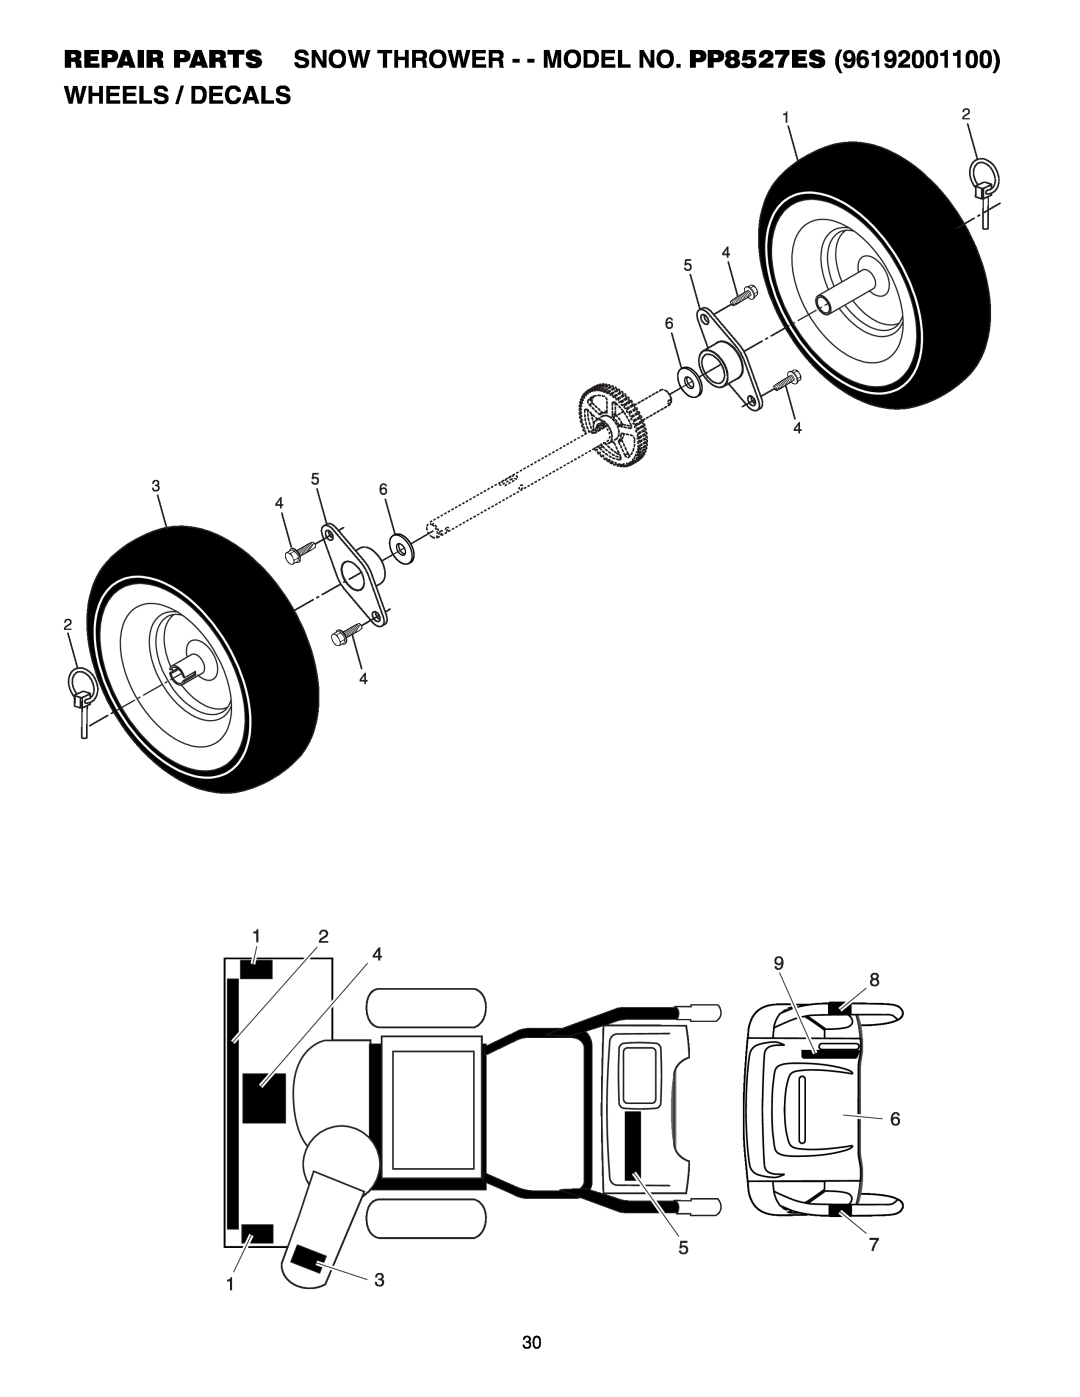 Poulan owner manual Wheels / Decals, REPAIR PARTS SNOW THROWER - - MODEL NO. PP8527ES 